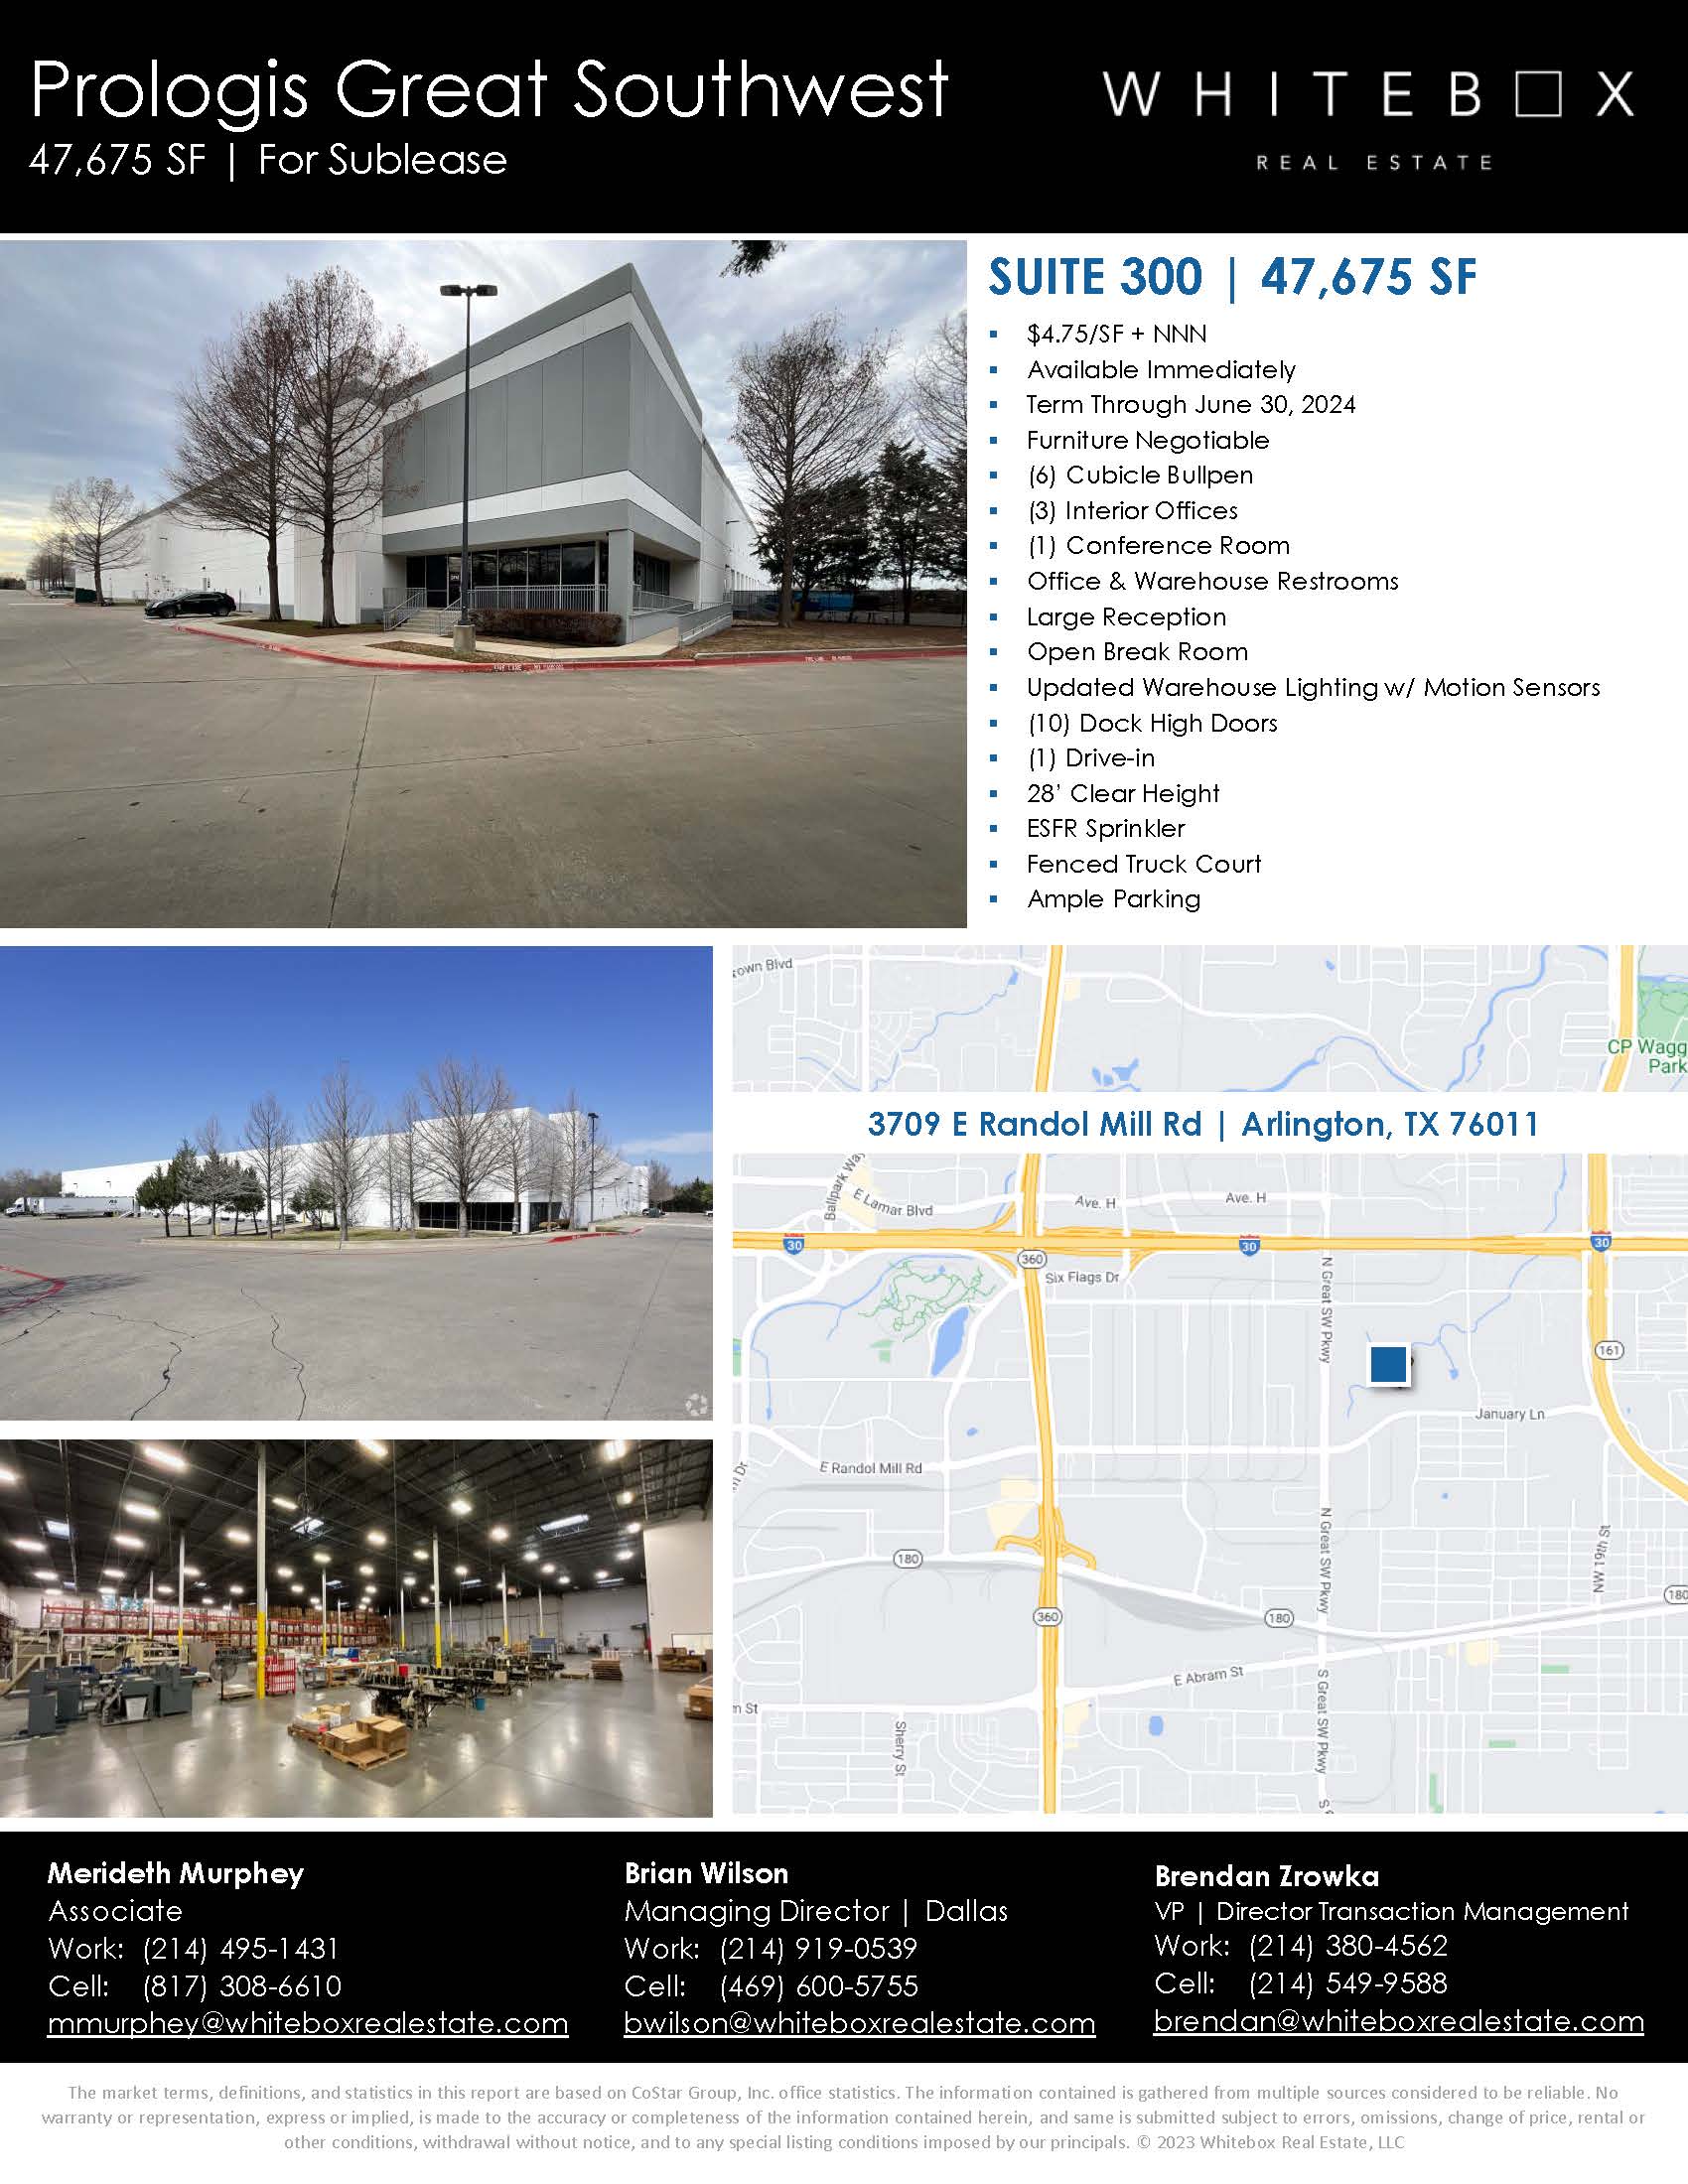 3709 E Randol Mill Road warehouse for sublease in arlington texas